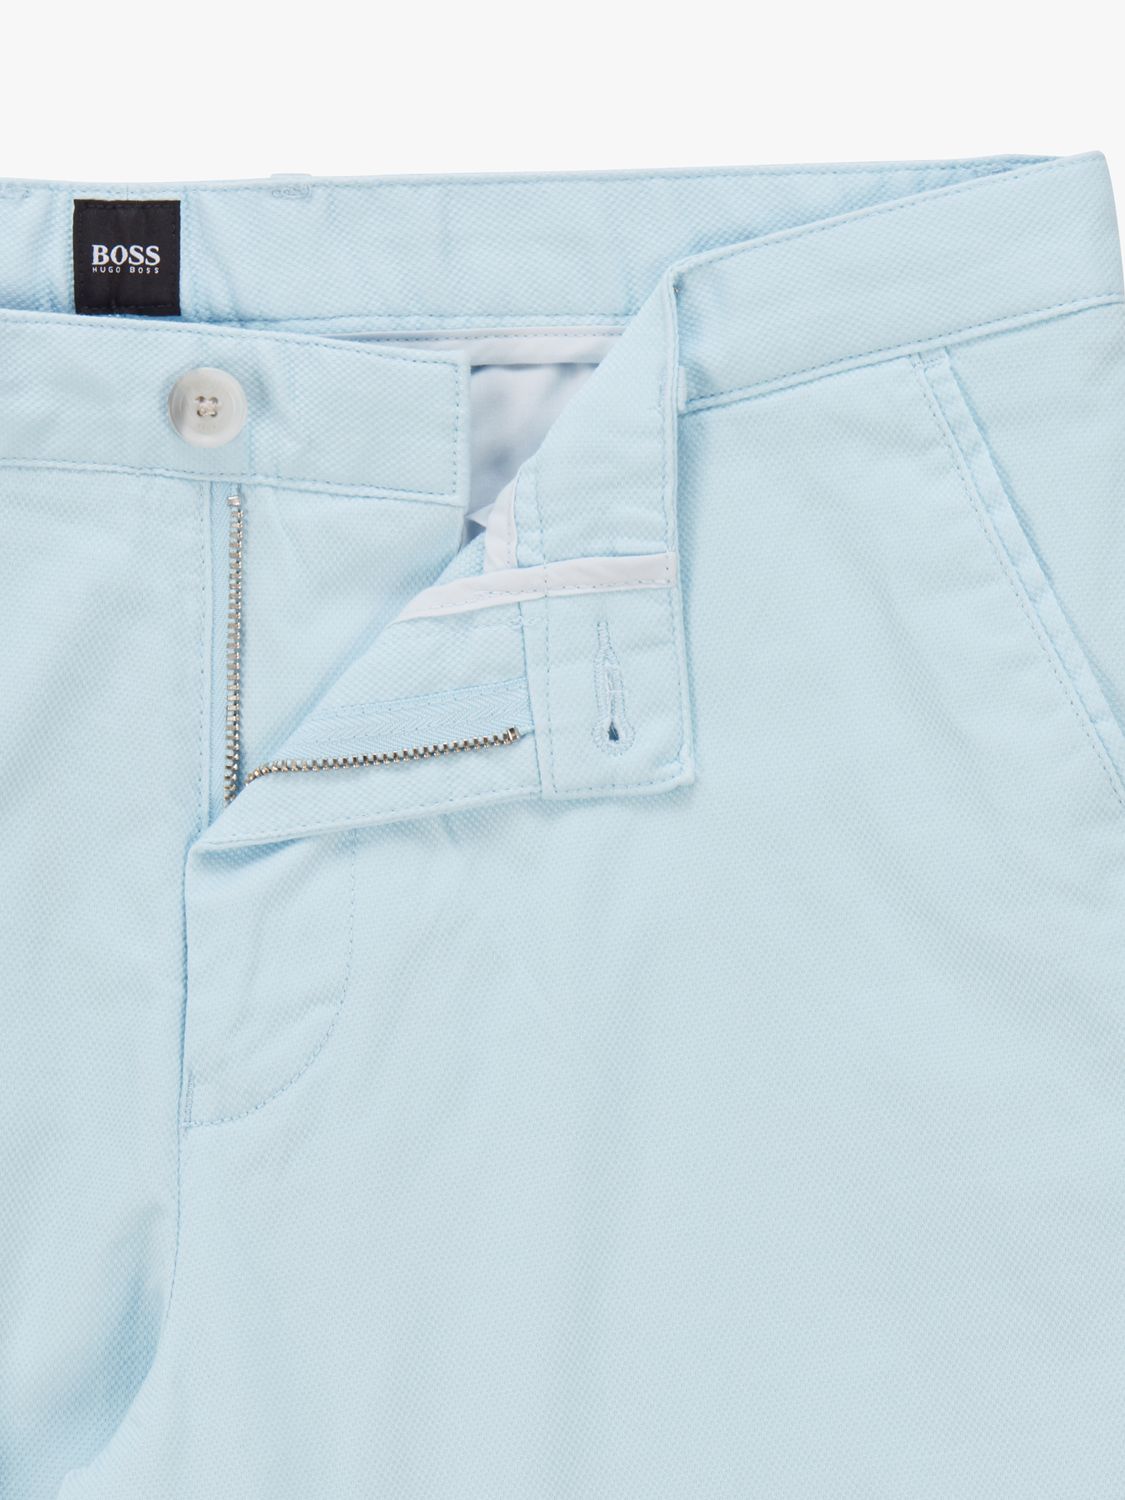 BOSS Slice Slim Fit Shorts, Pastel Blue at John Lewis & Partners